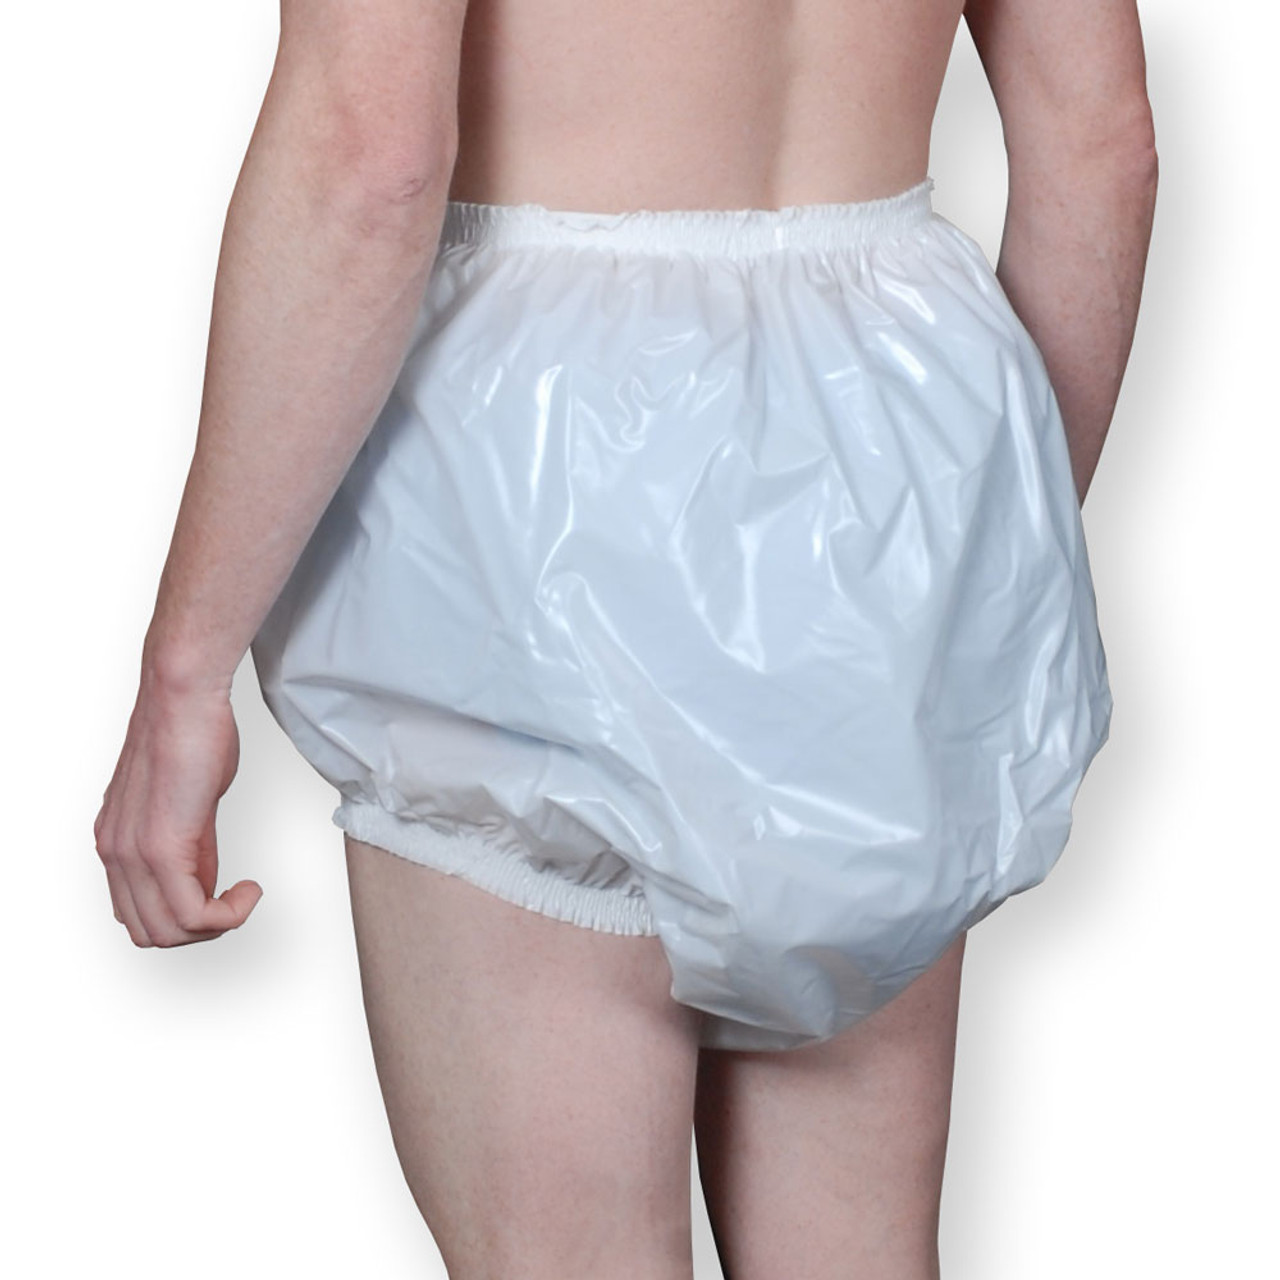  Adult Plastic Pants,PVCadult Rubber Pants,Waterproof